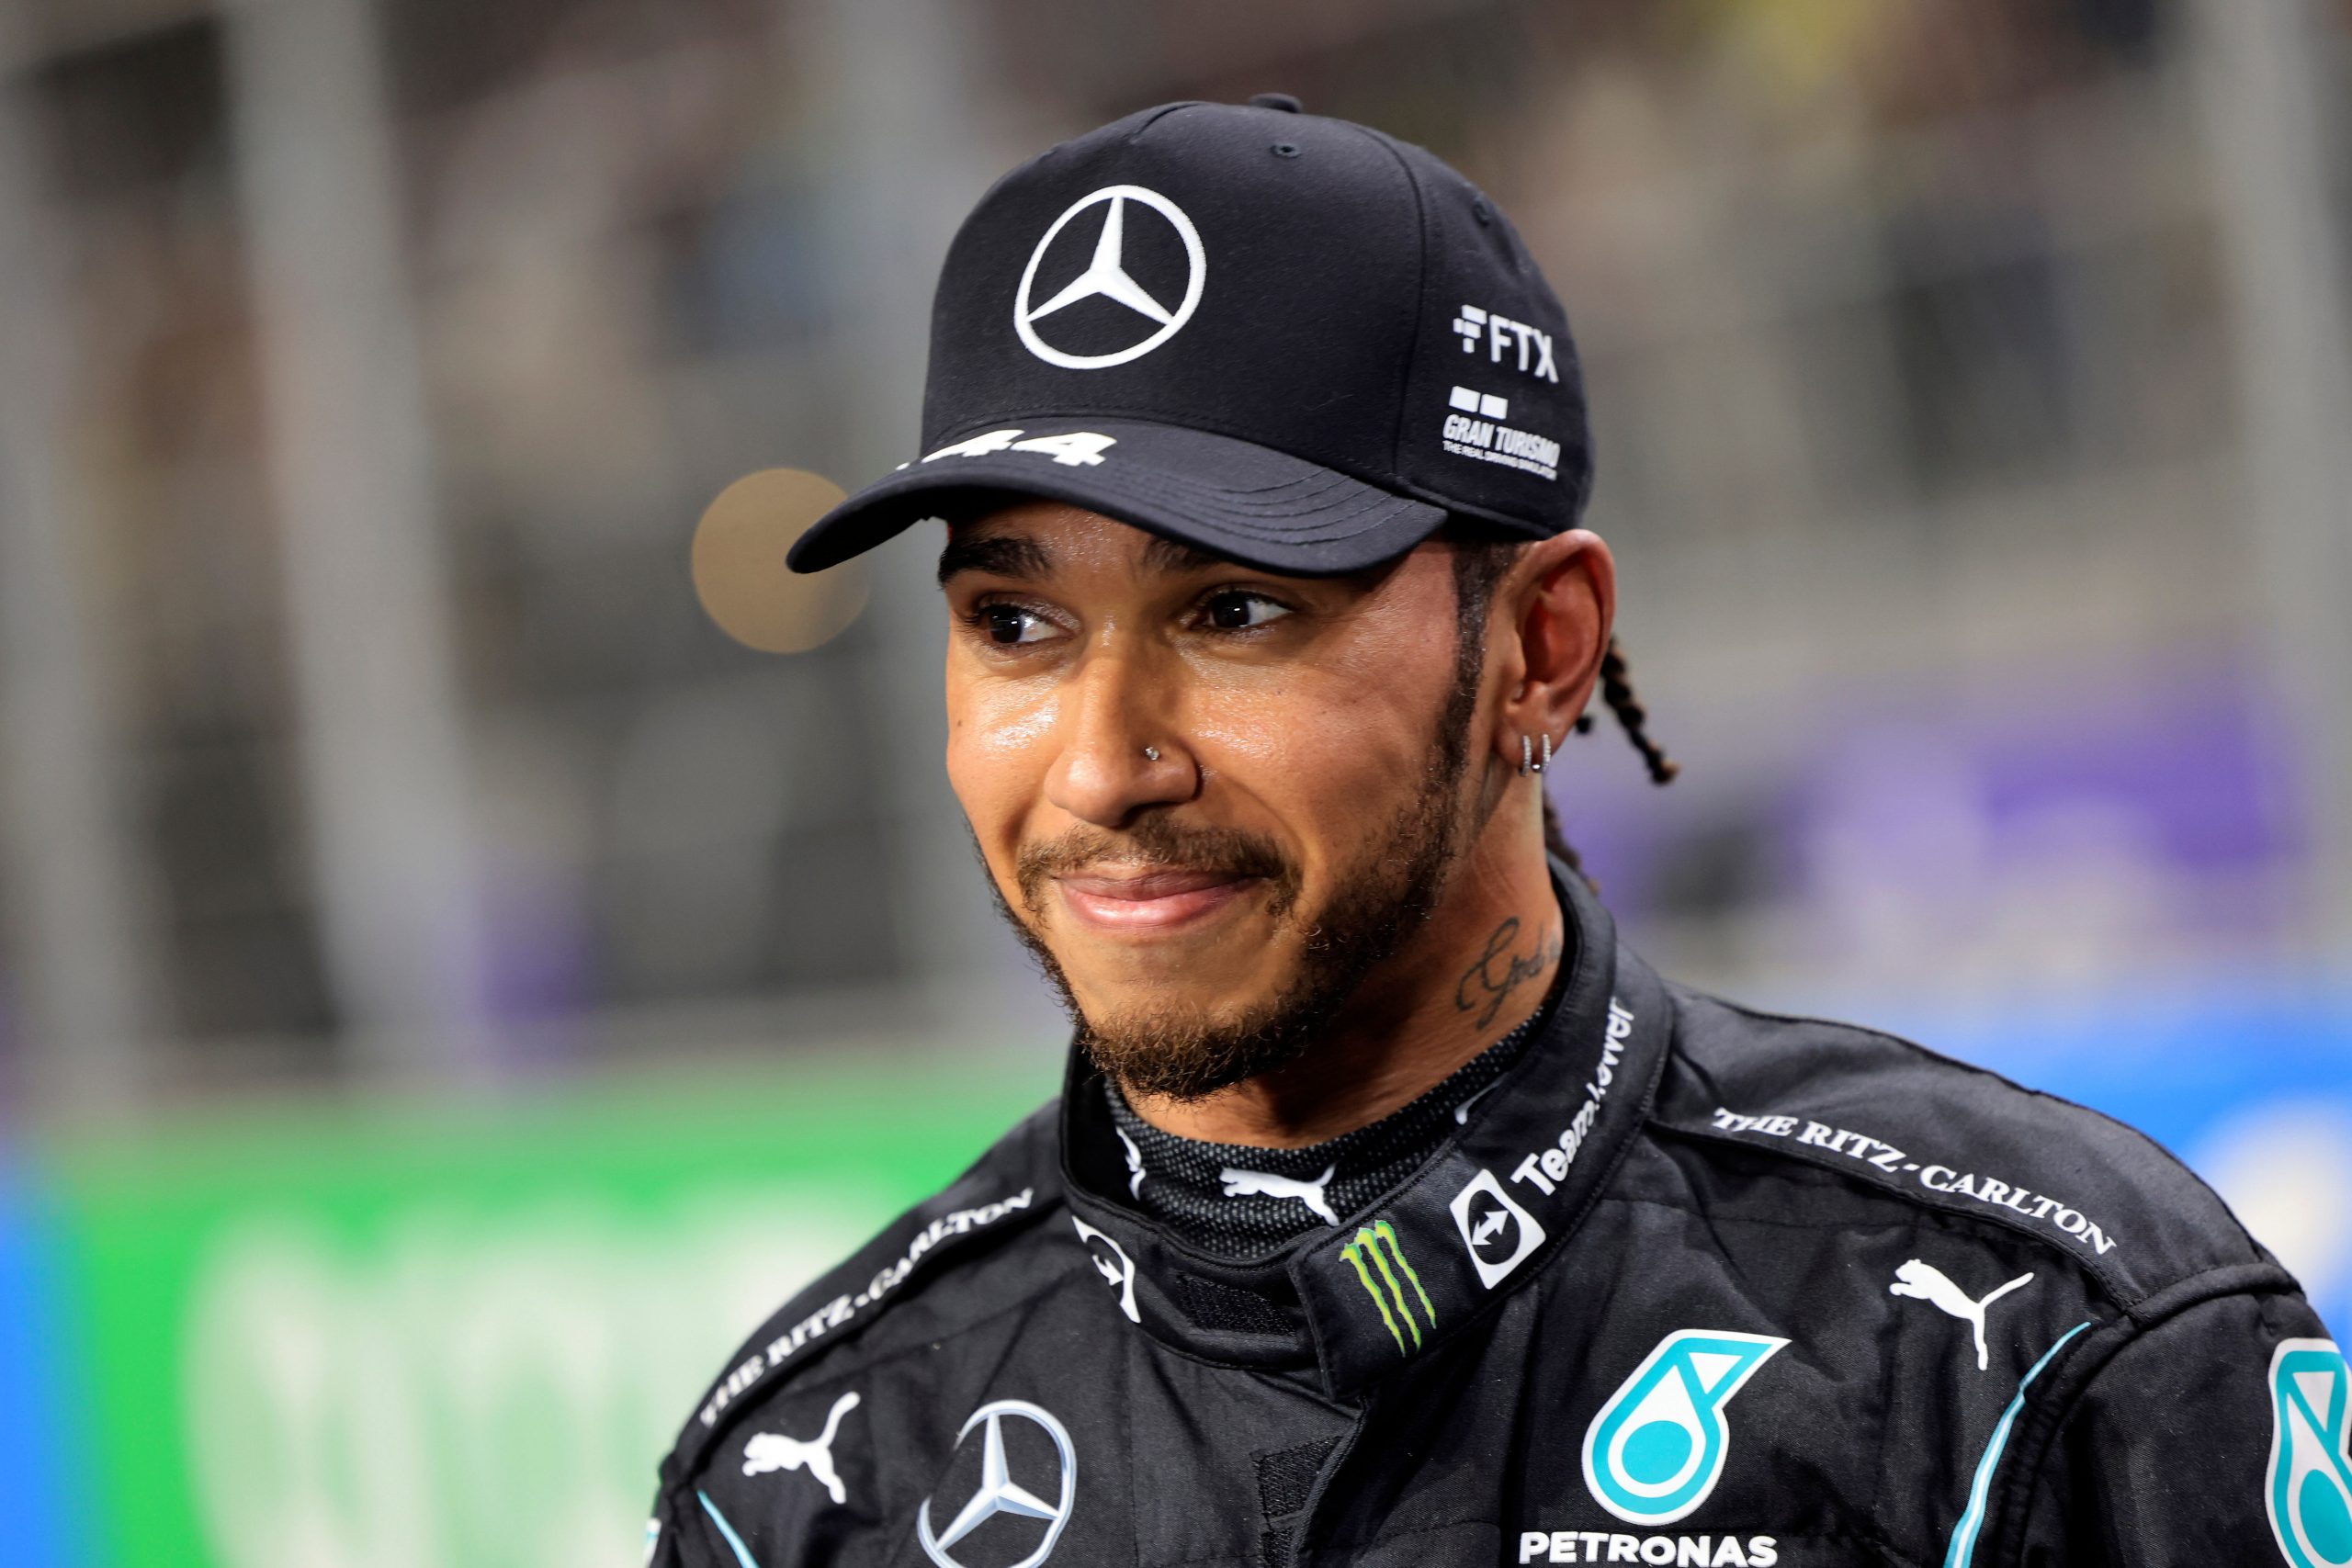 Hamilton admits ‘difficult time’ after Abu Dhabi GP as Mercedes unveil 2022 car